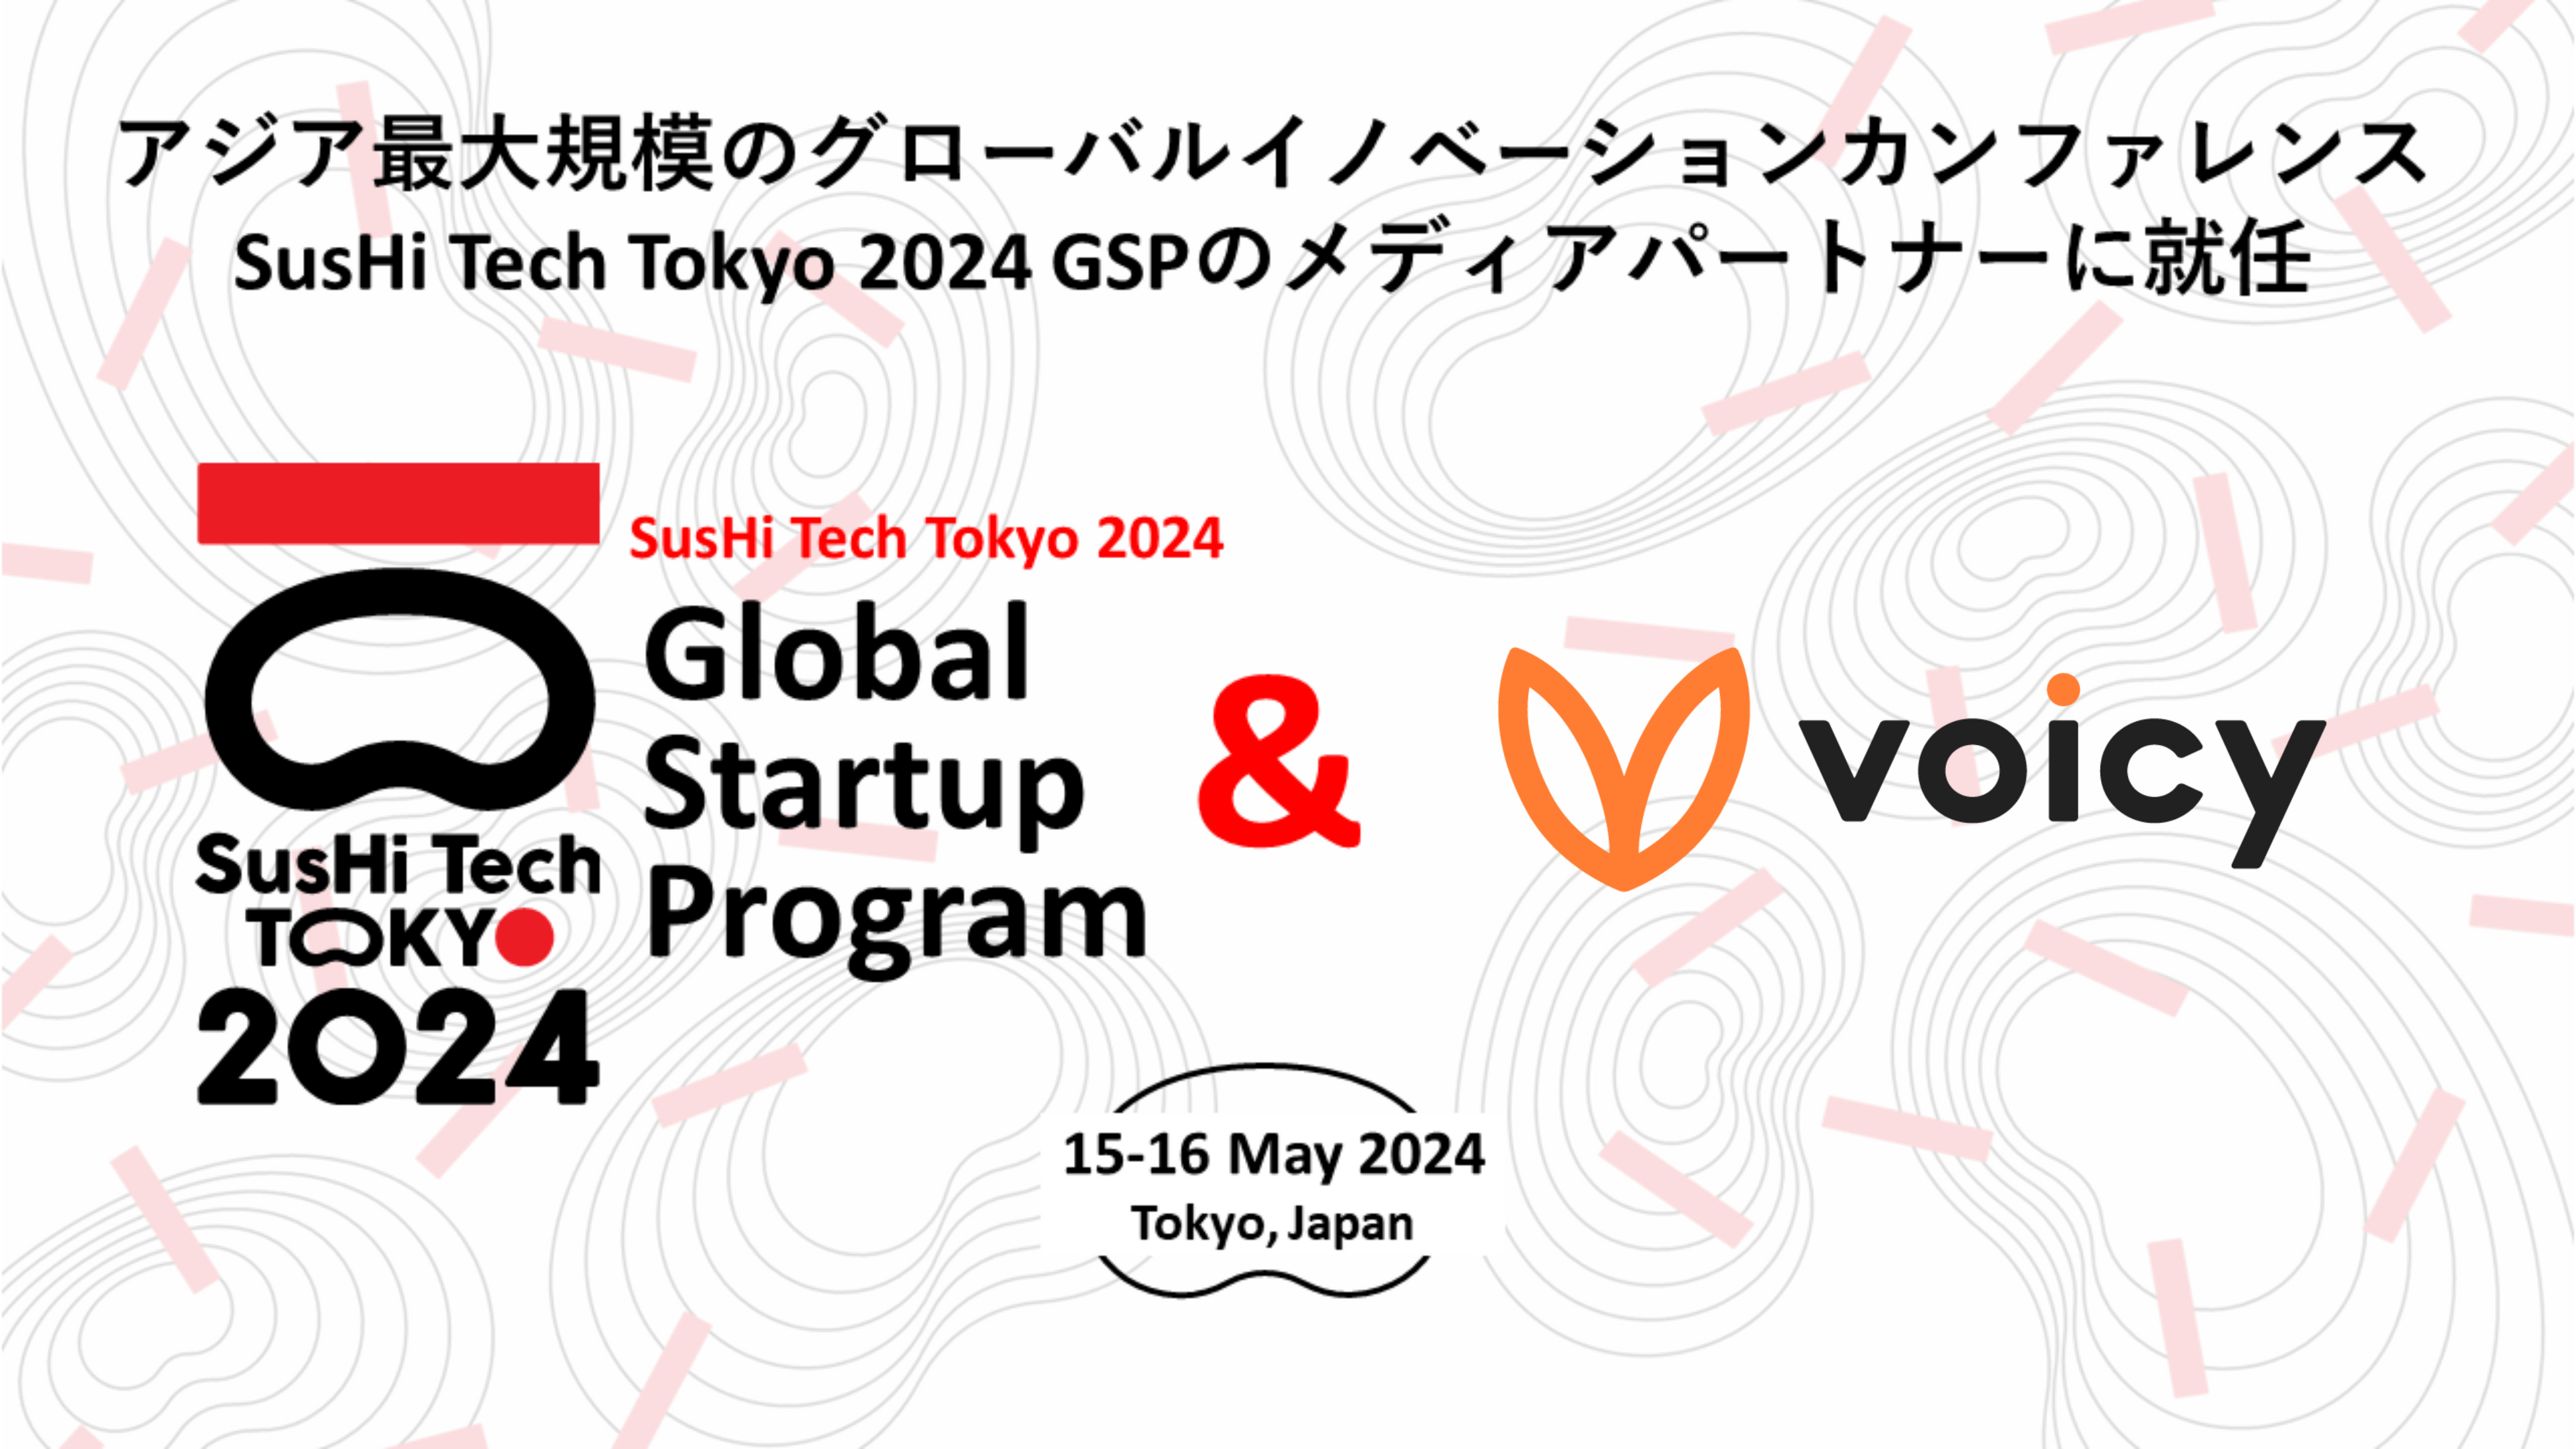 VoicyAAWAőK͂̃O[oCmx[VJt@XuSusHi Tech Tokyo 2024 Global Startup ProgramṽfBAp[gi[ɏAC